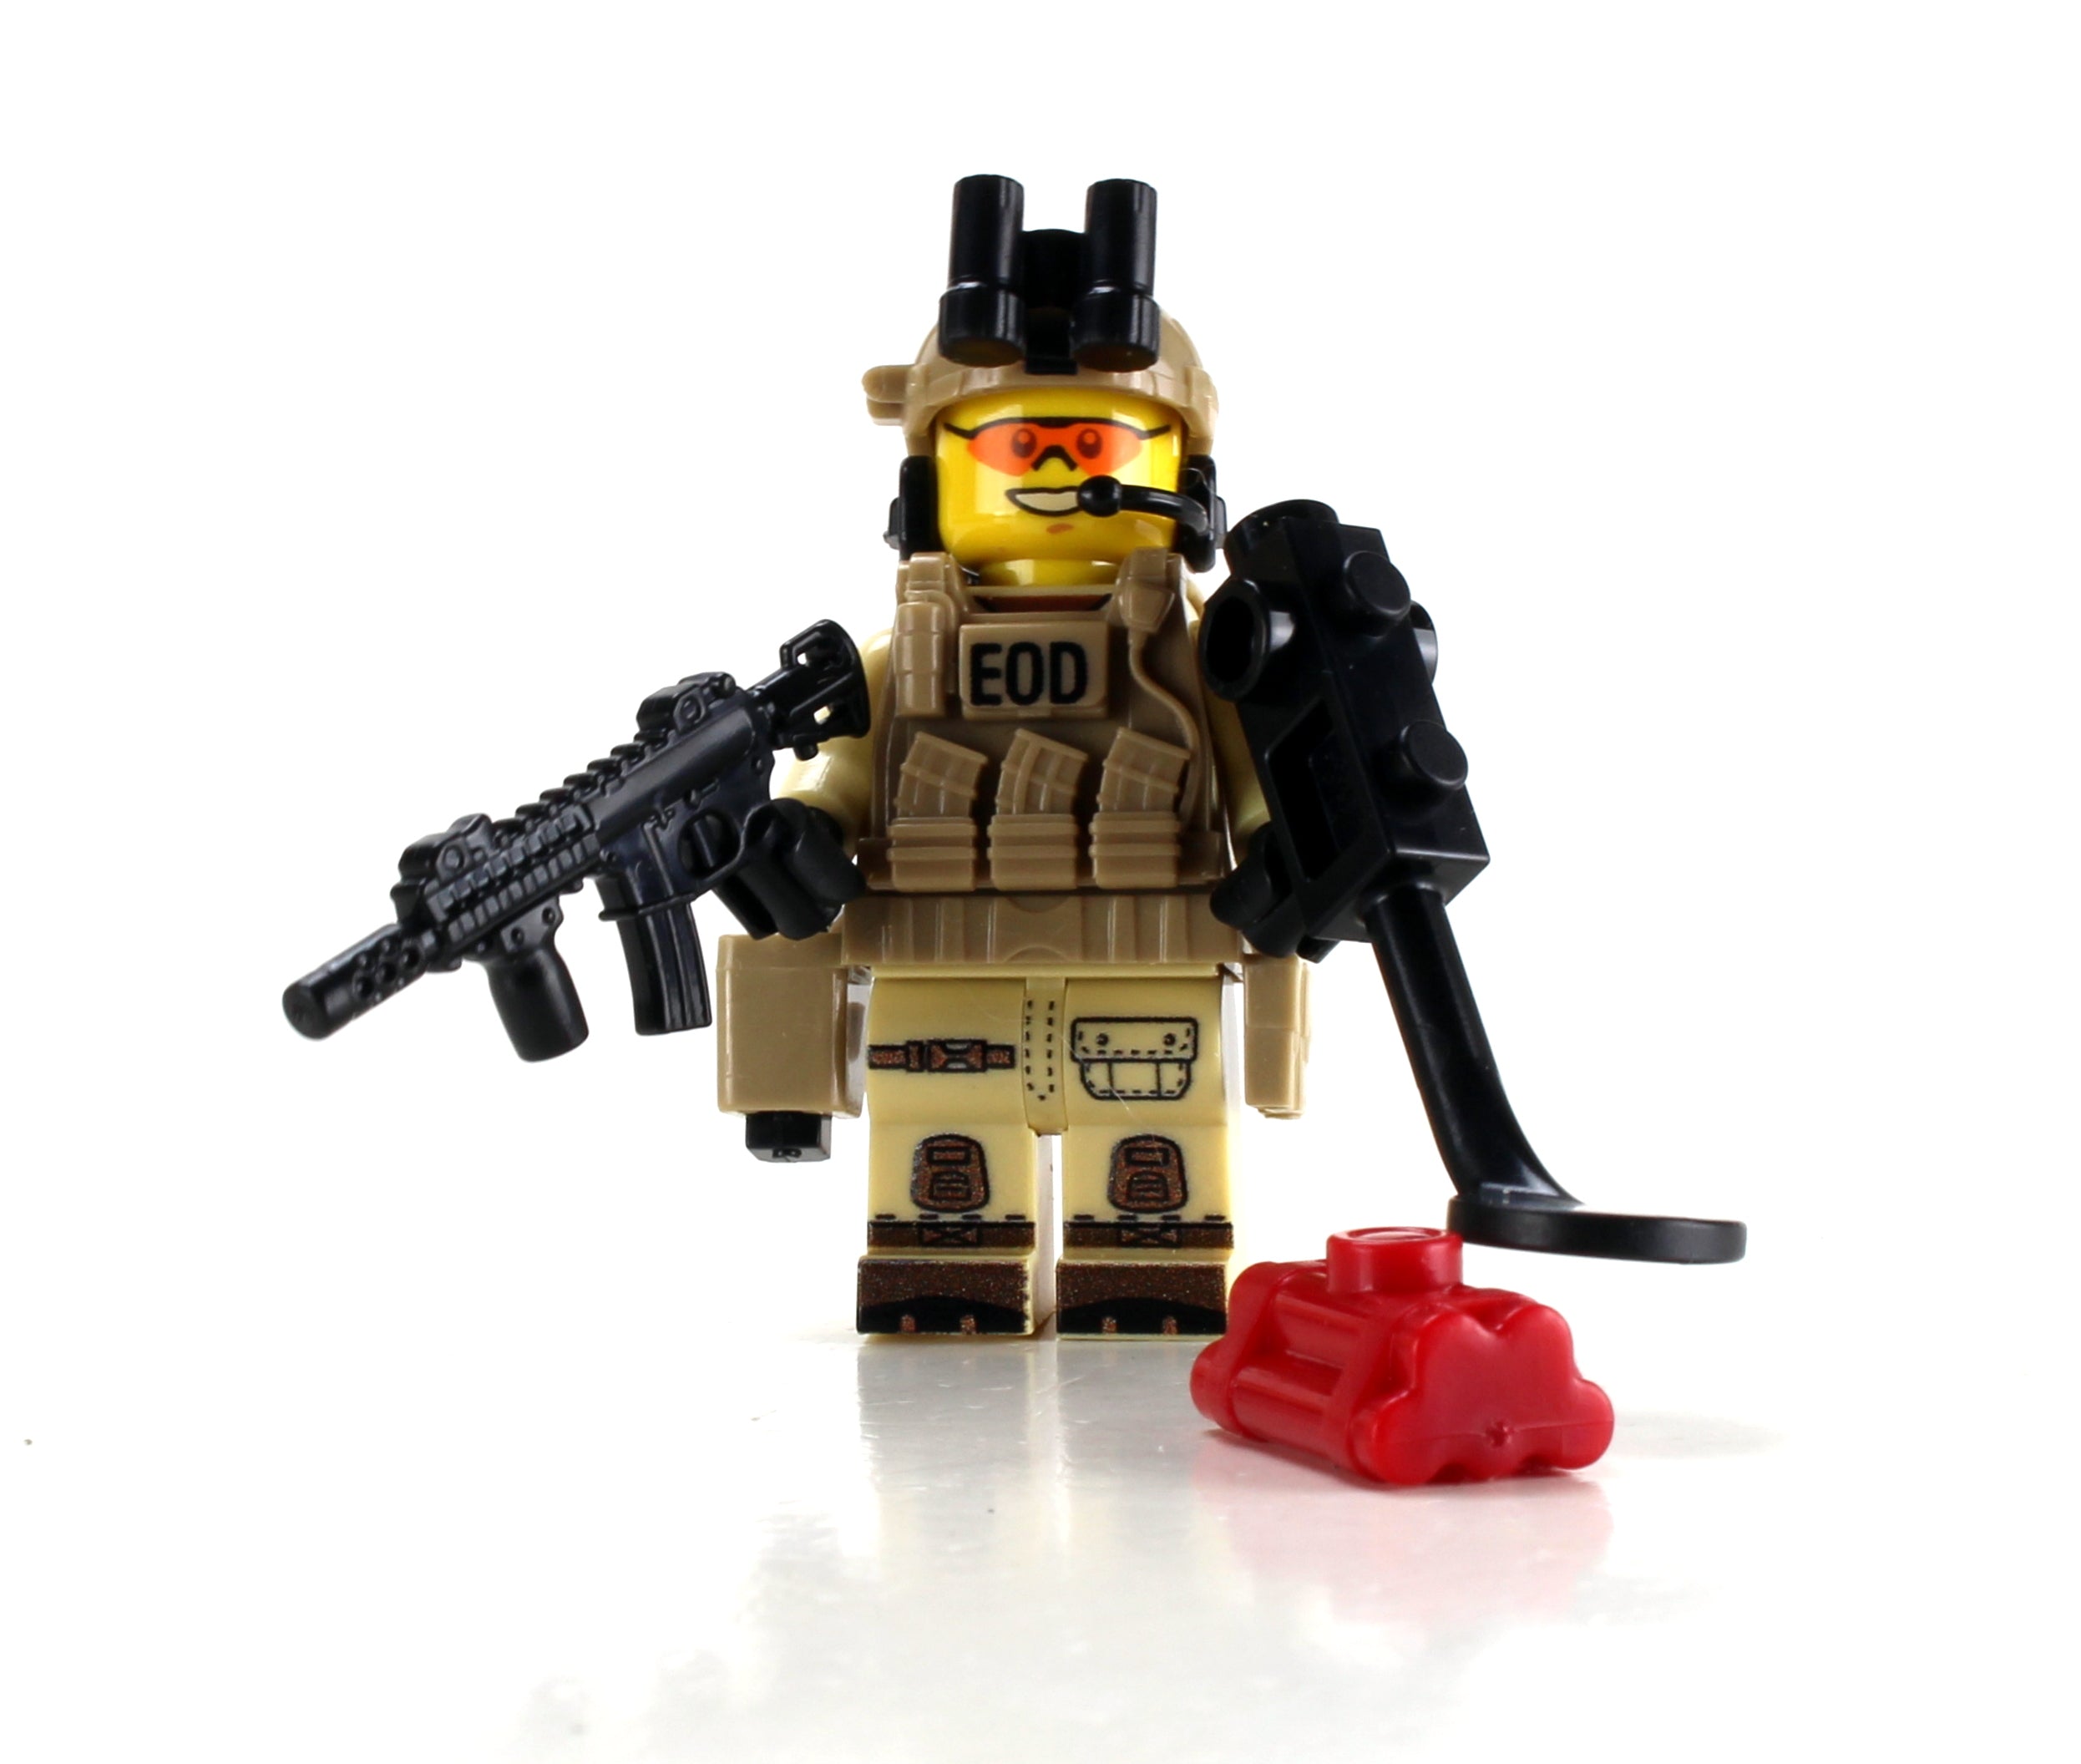 EOD Explosive Ordnance Disposal Specialist Minifig made using LEGO bricks